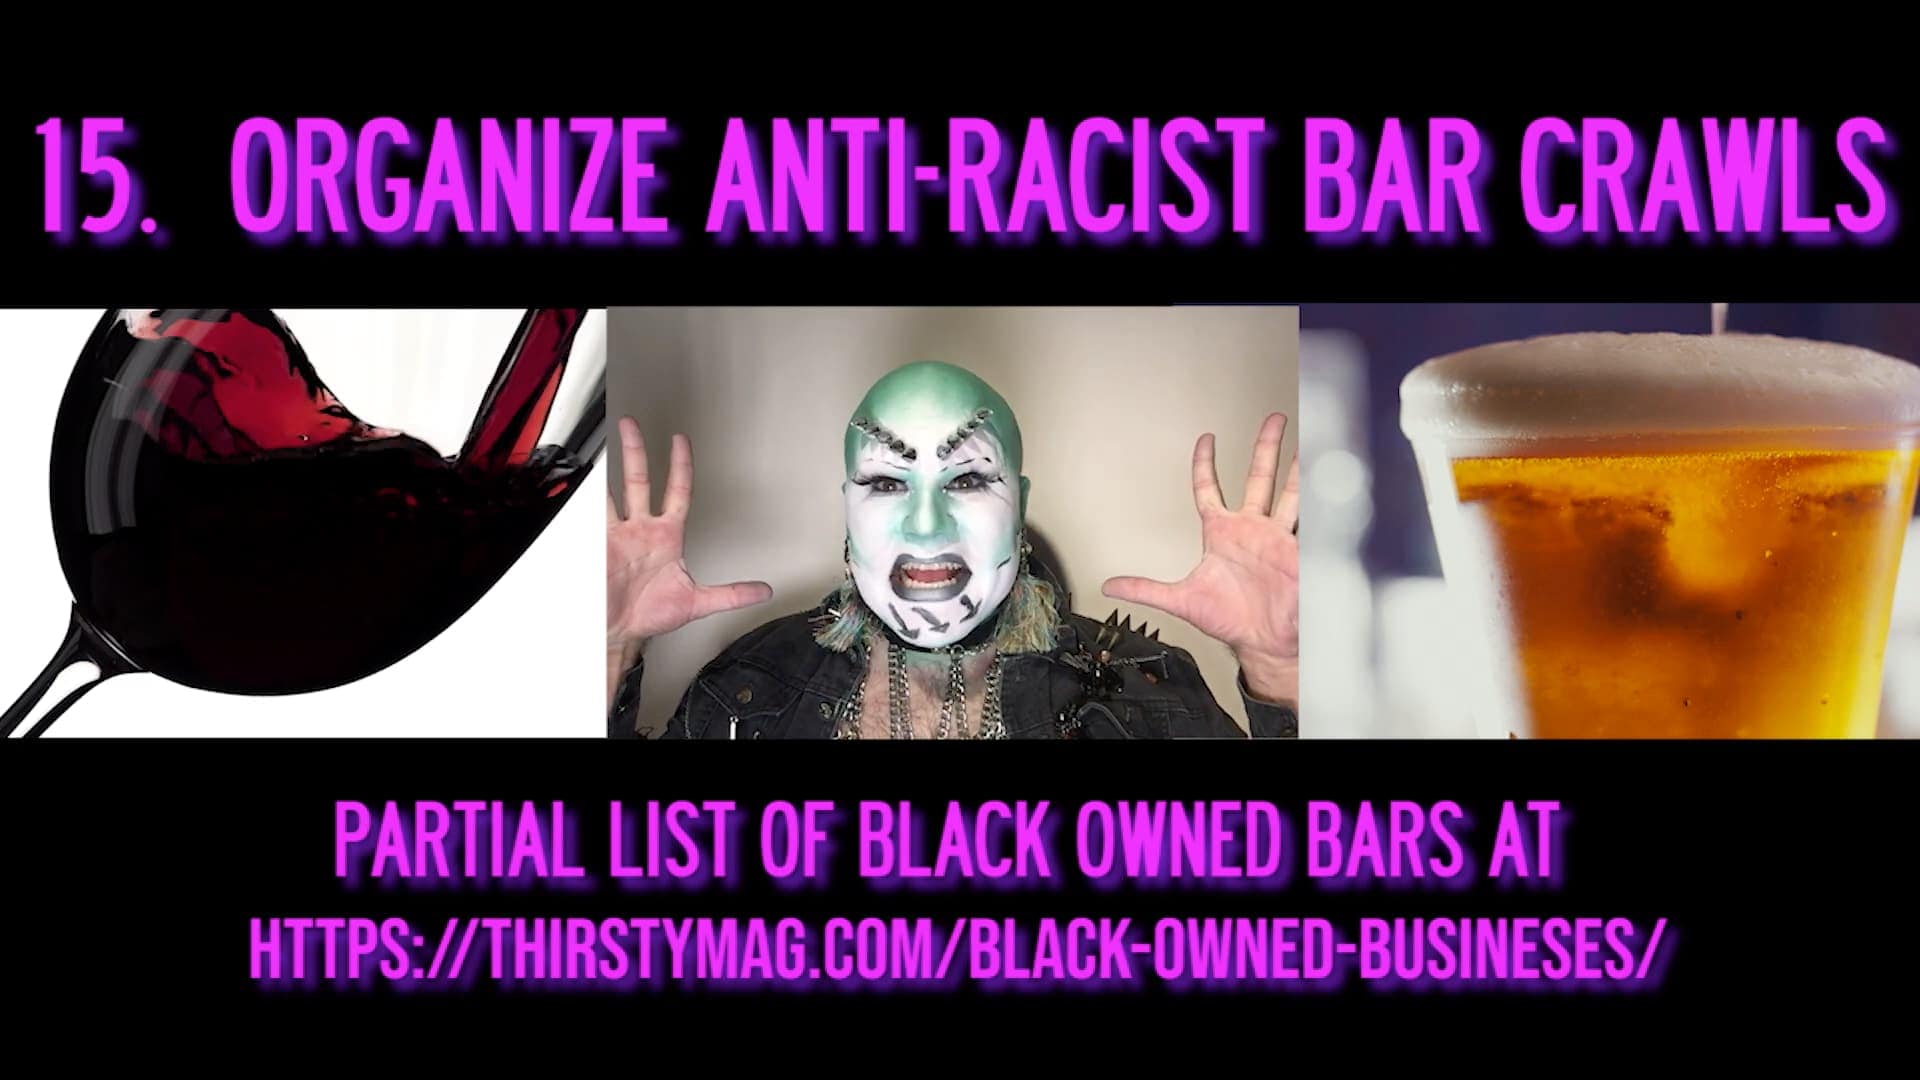 15. Organize anti-racist bar crawls